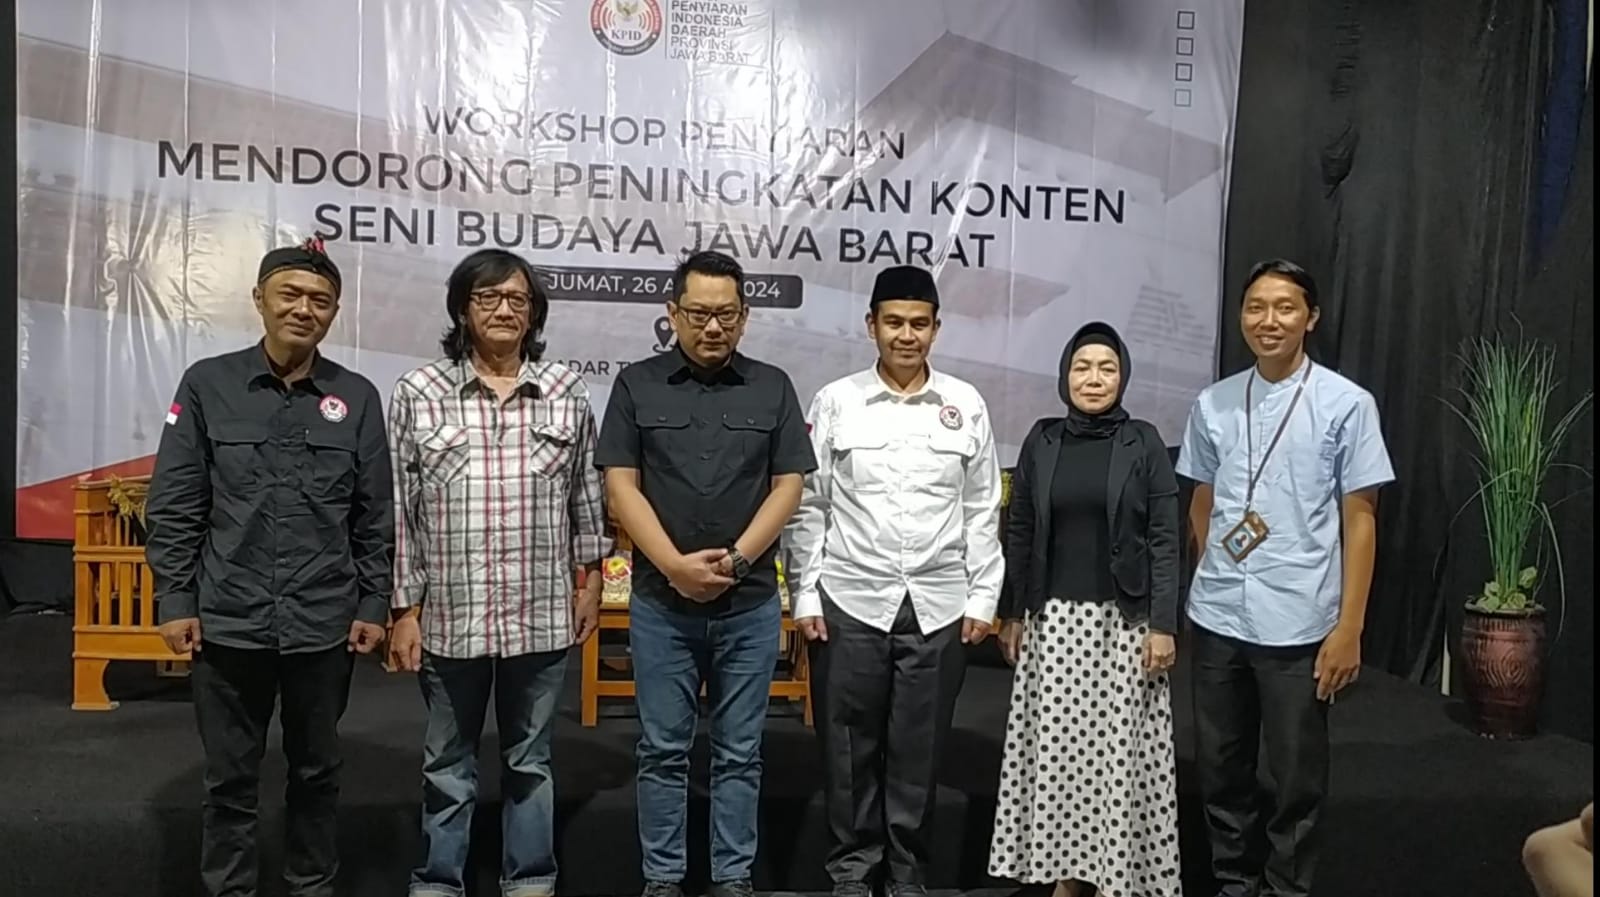 Dorong Peningkatan Konten Seni Budaya di Media Lokal, KPID Jawa Barat Lakukan ini....